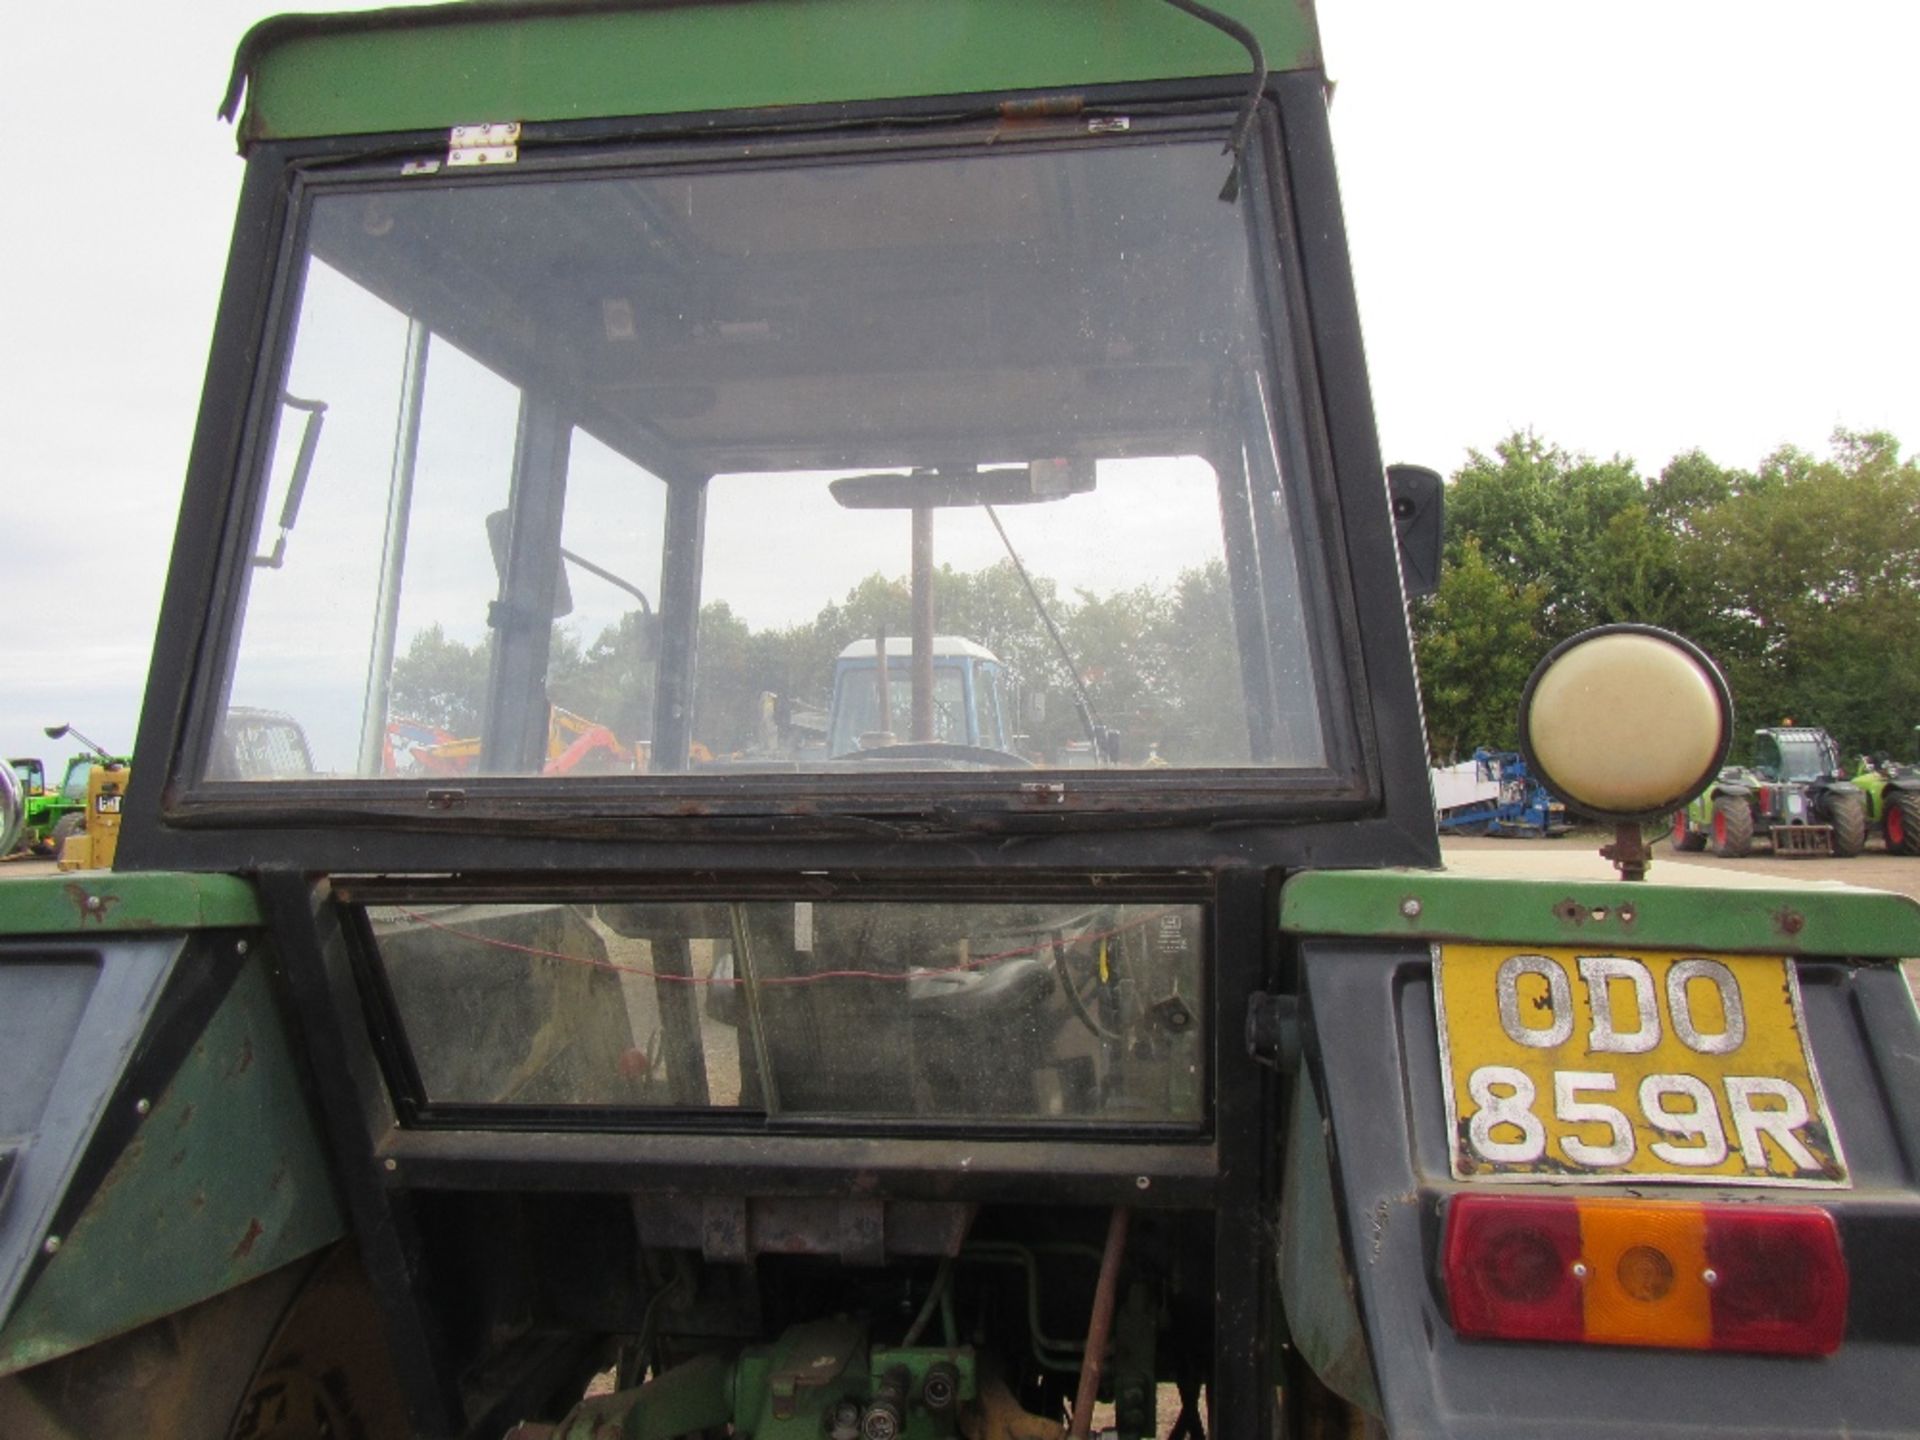 John Deere 2030 Tractor with Quicke Loader Reg. No. ODO 859R Ser. No. 237263 - Image 8 of 16